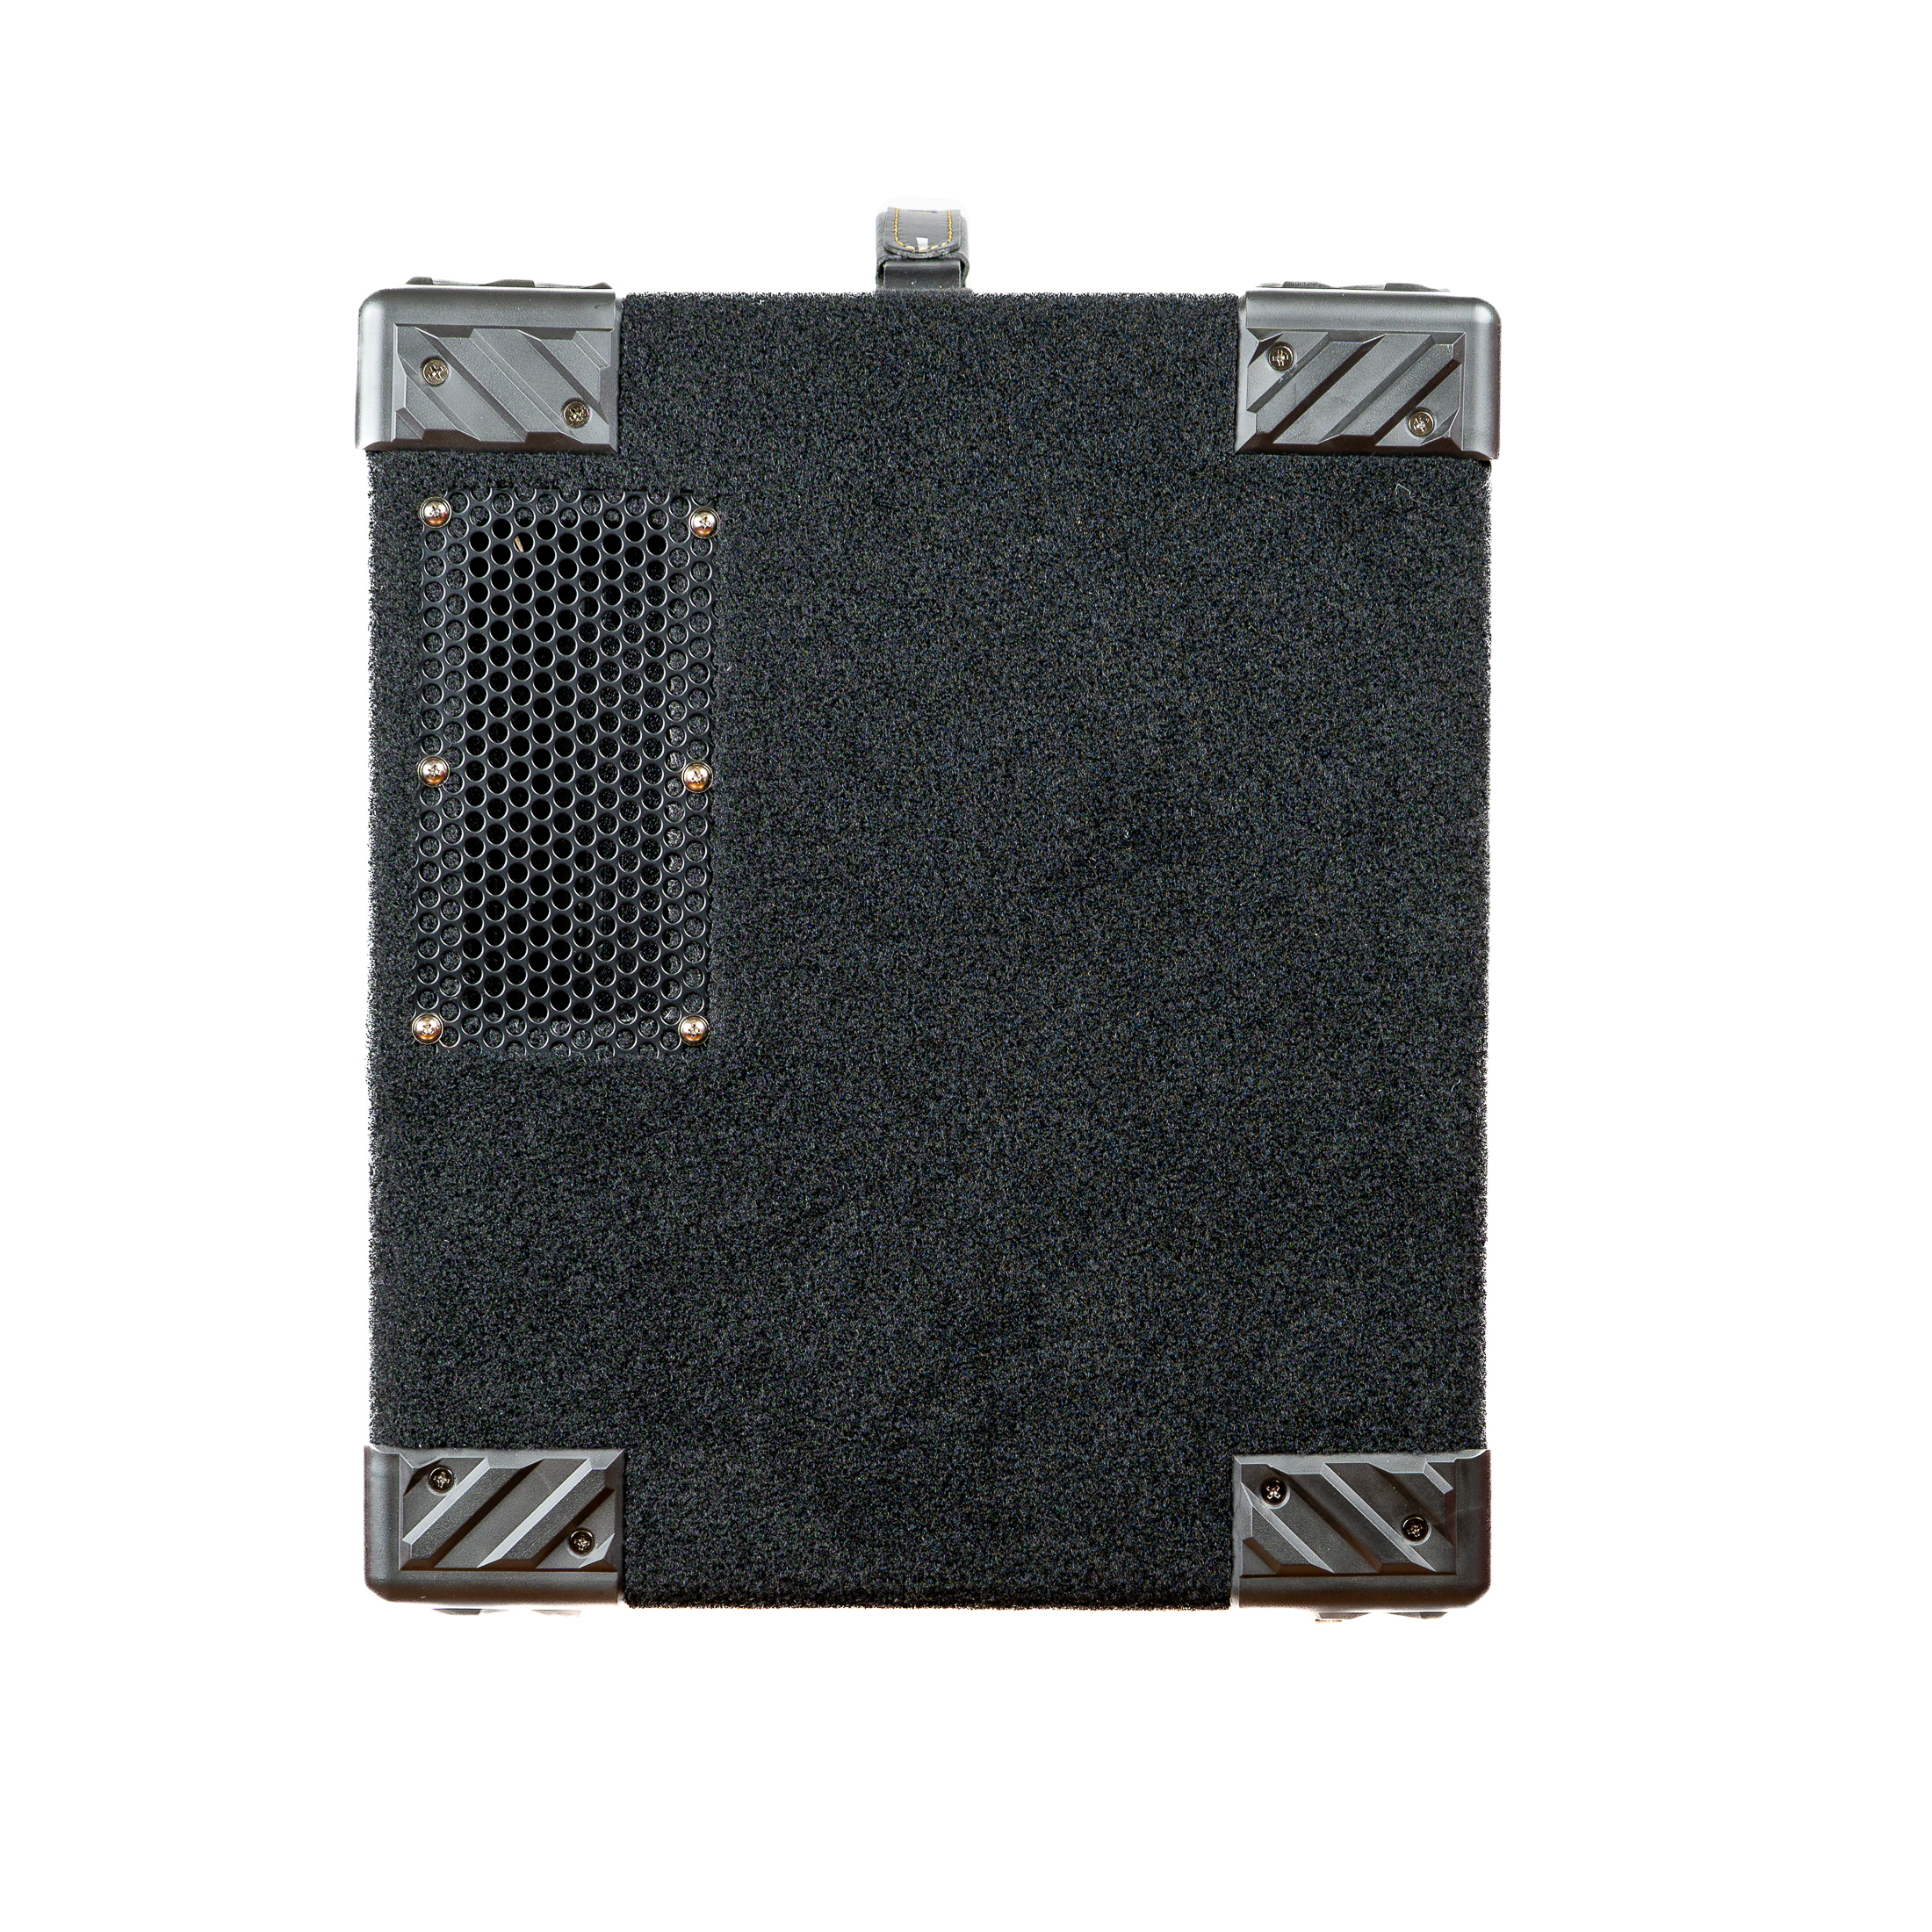 Markbass Mini Cmd 121 P V Piezo 1x12 500w Black - Combo amplificador para bajo - Variation 1